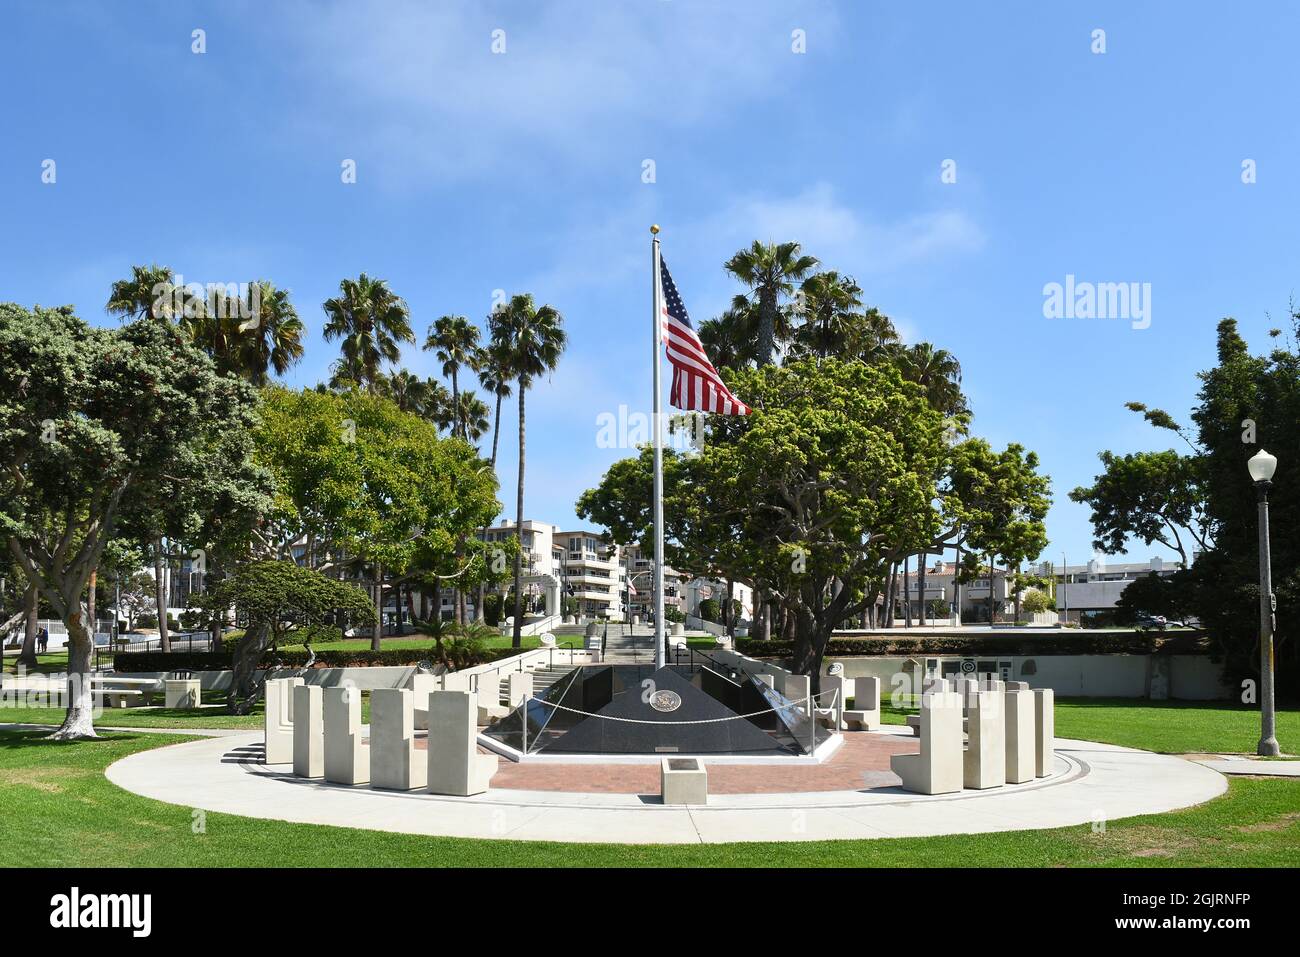 REDONDO BEACH, CALIFORNIA - 10 SEP 2021: The Memorial at Veterans Park in Redondo Beach. Stock Photo